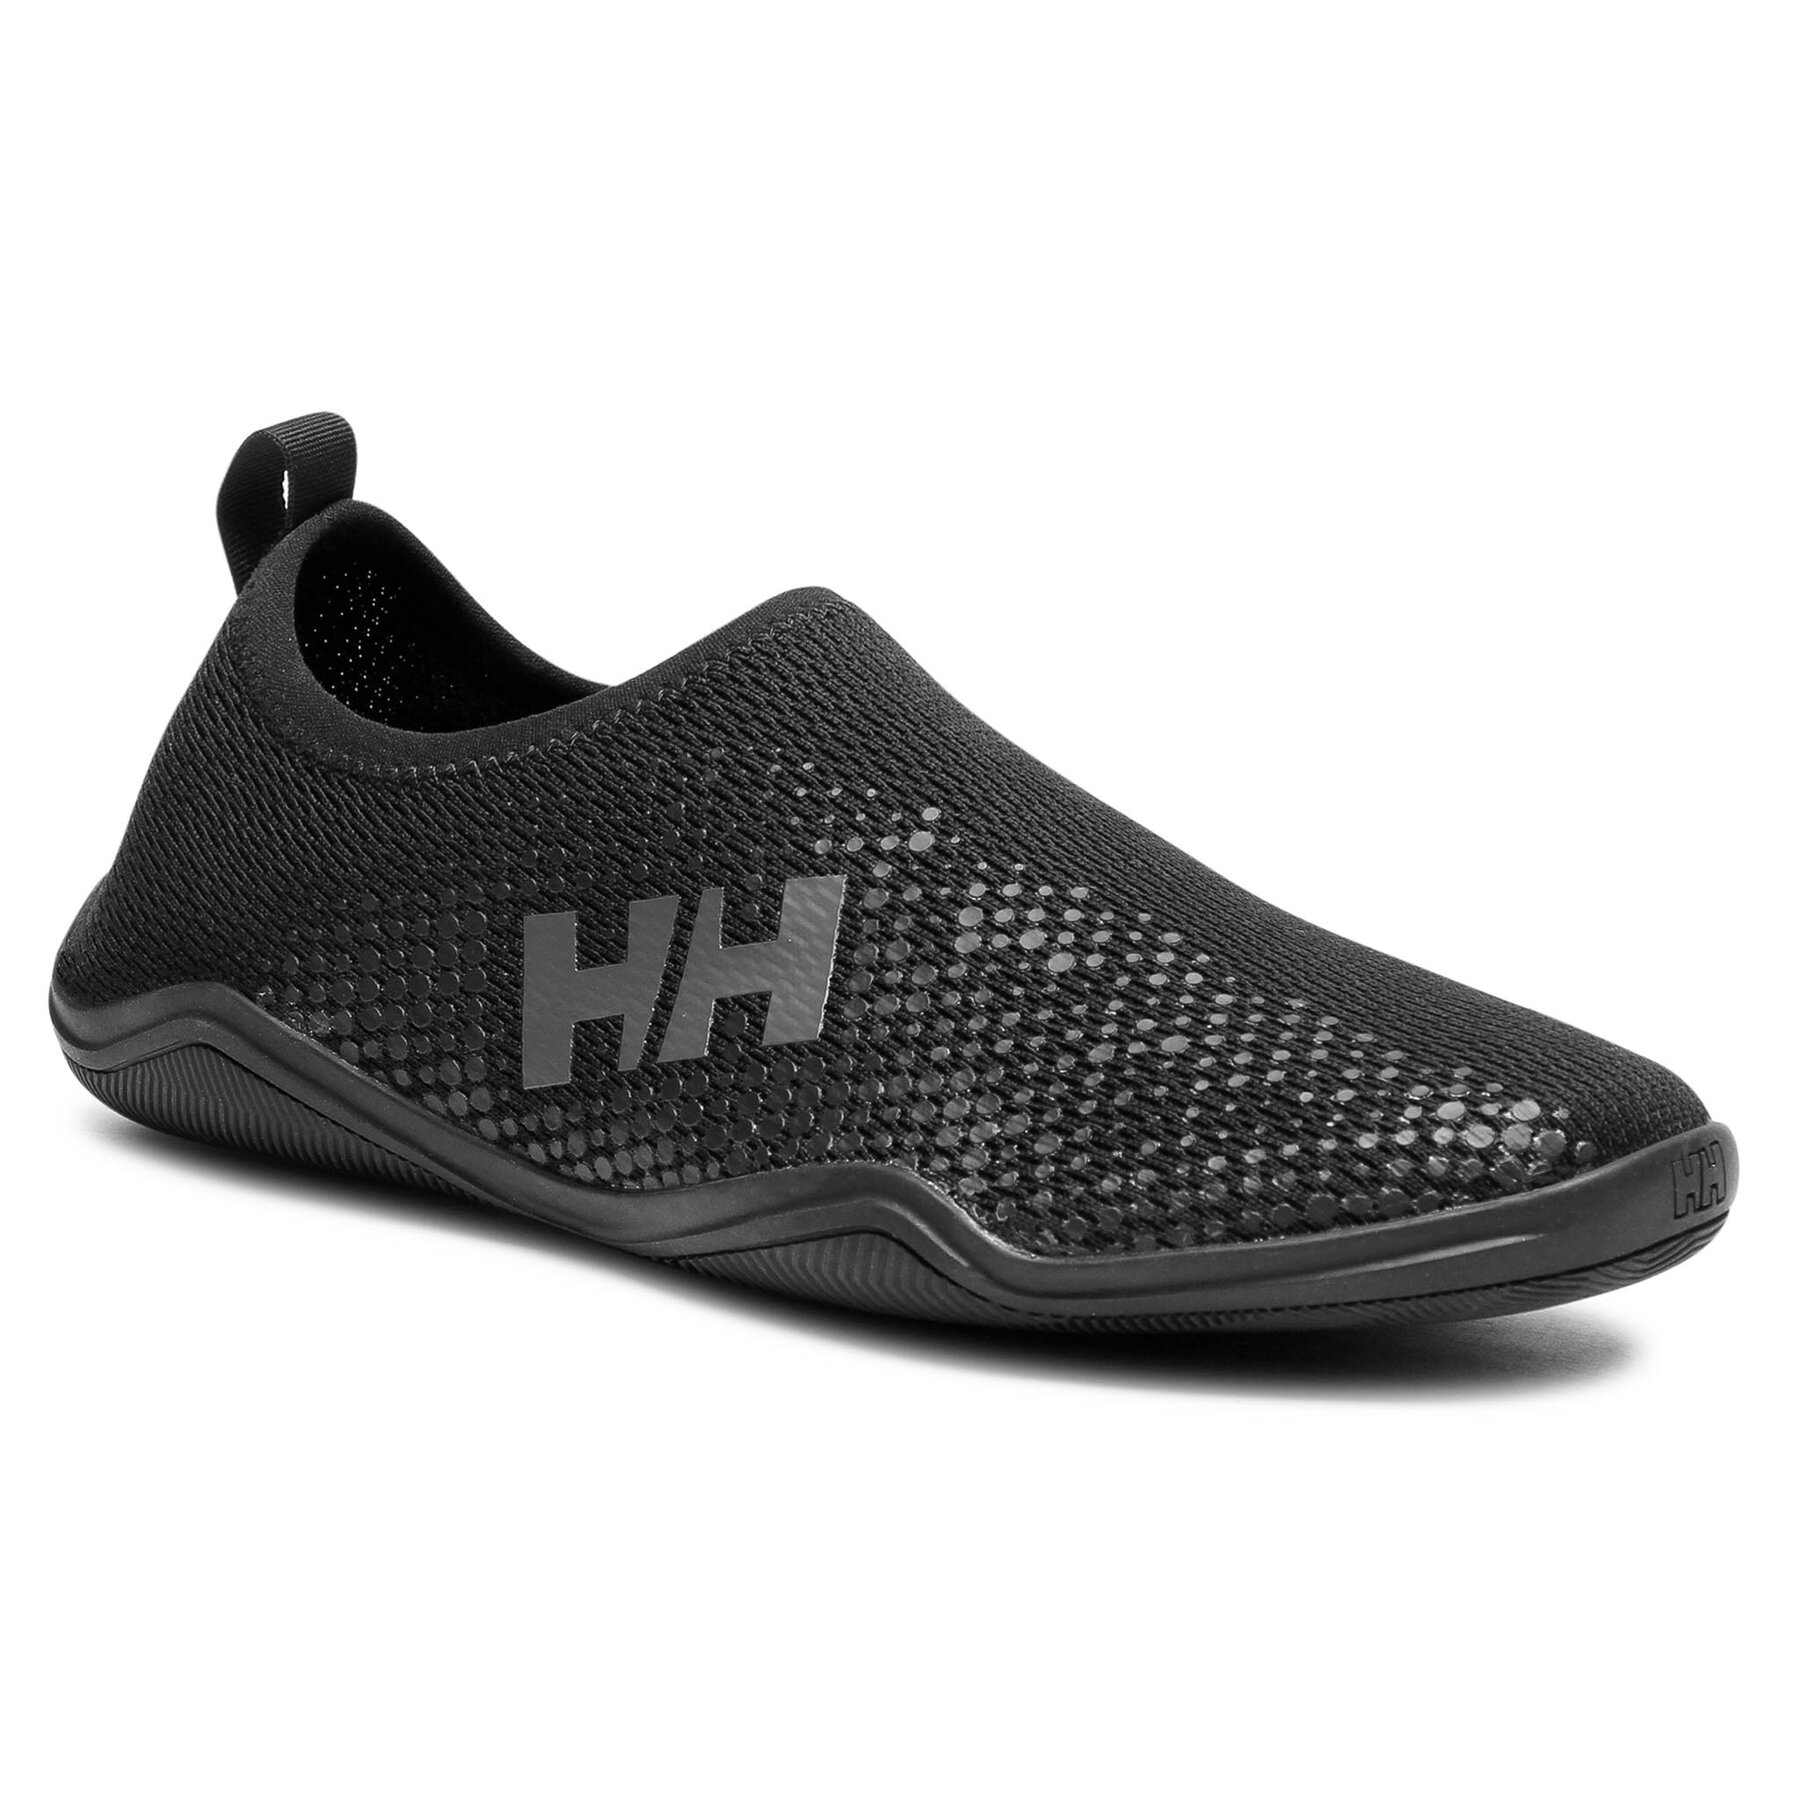 Čevlji Helly Hansen Crest Watermoc 11555 990 Black/Charcoal